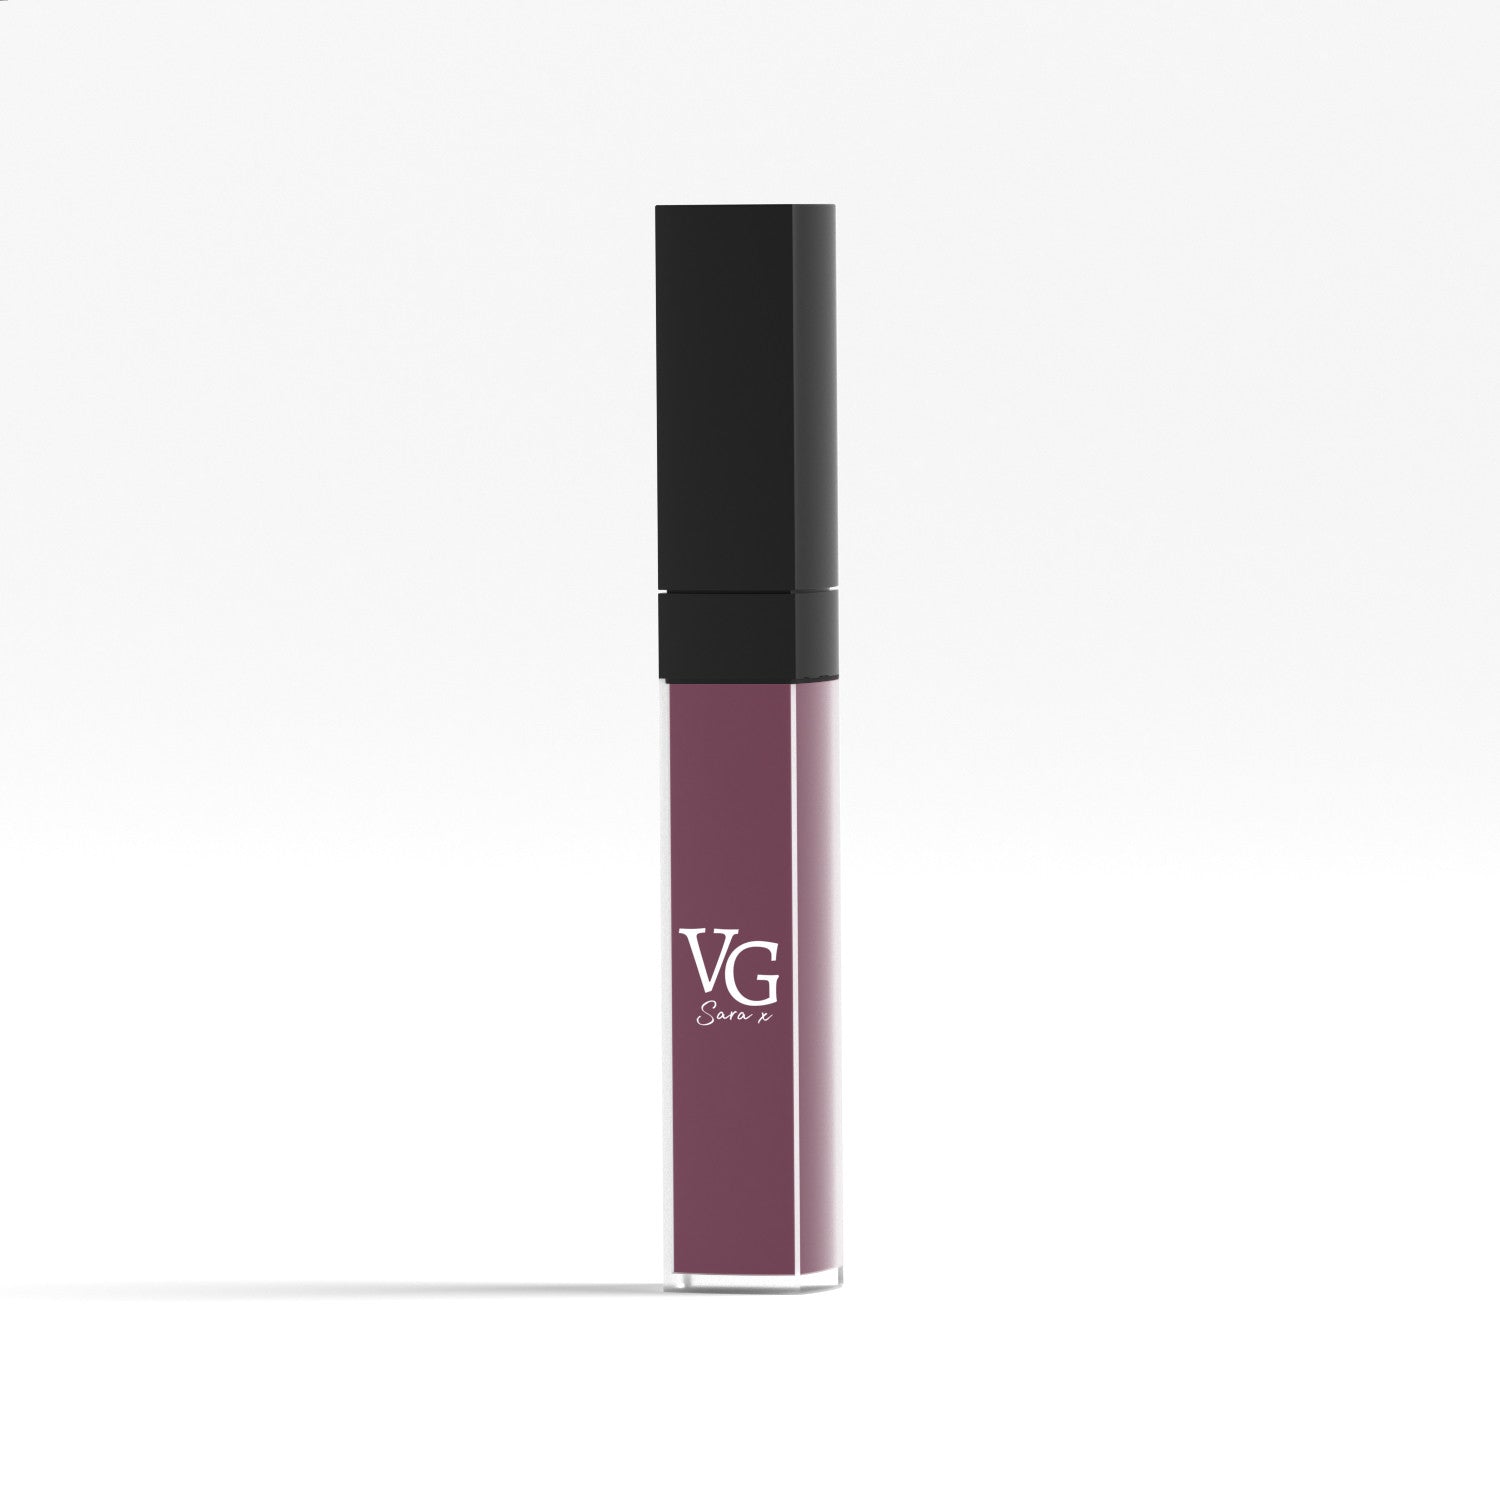 VG vegan cruelty-free liquid lipstick in a bold purple hue